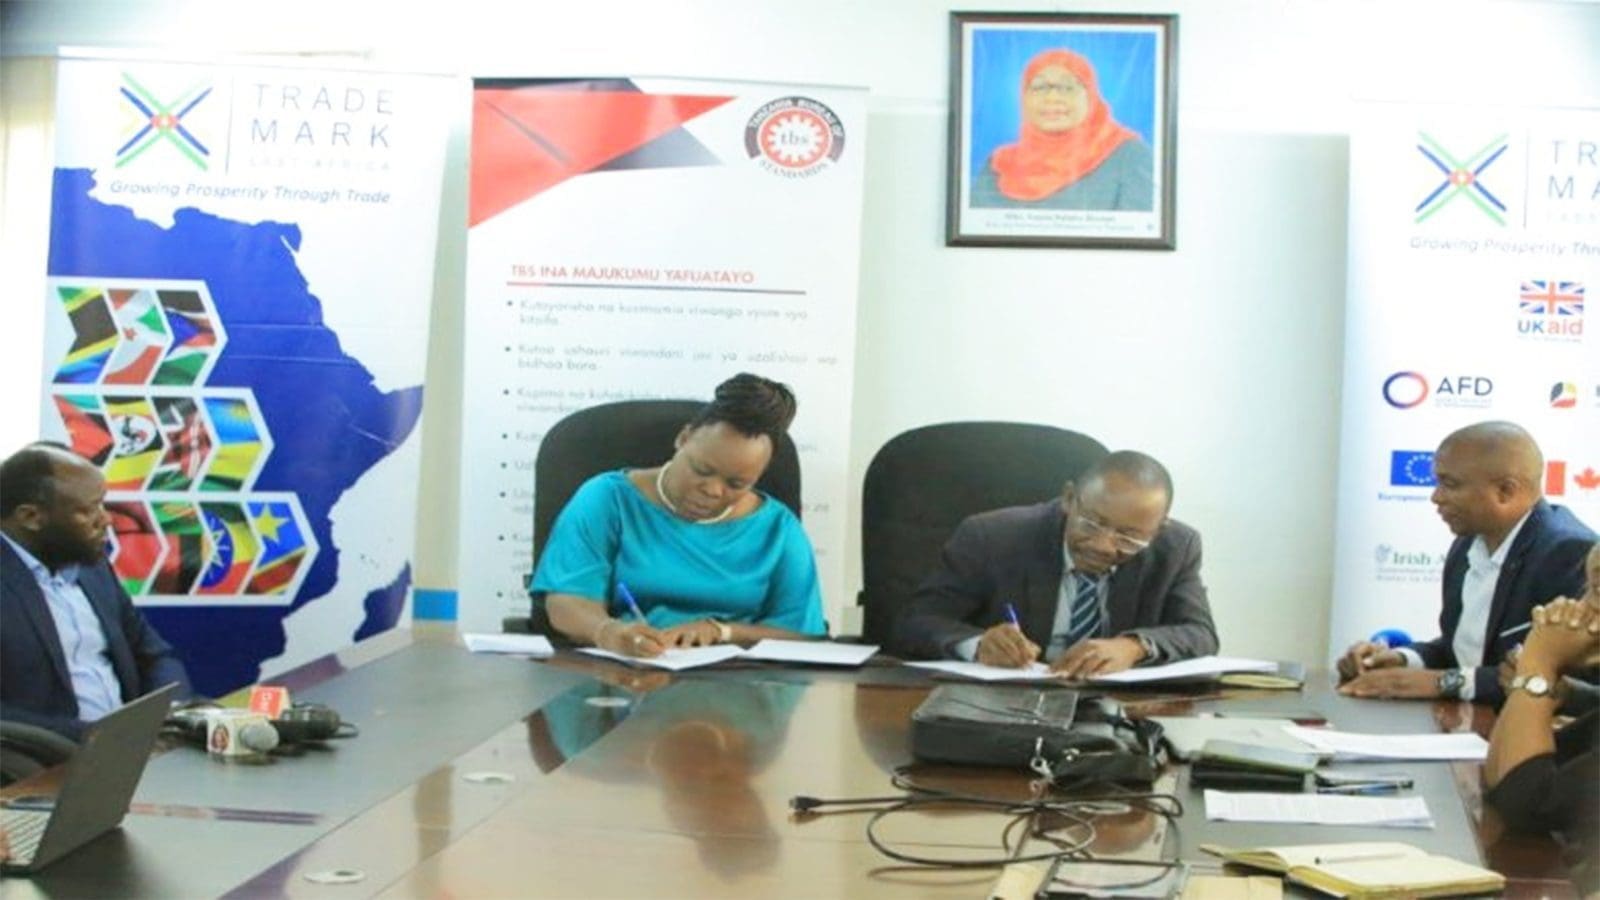 TradeMark East Africa, Tanzania Bureau of Standards sign deal to facilitate trade